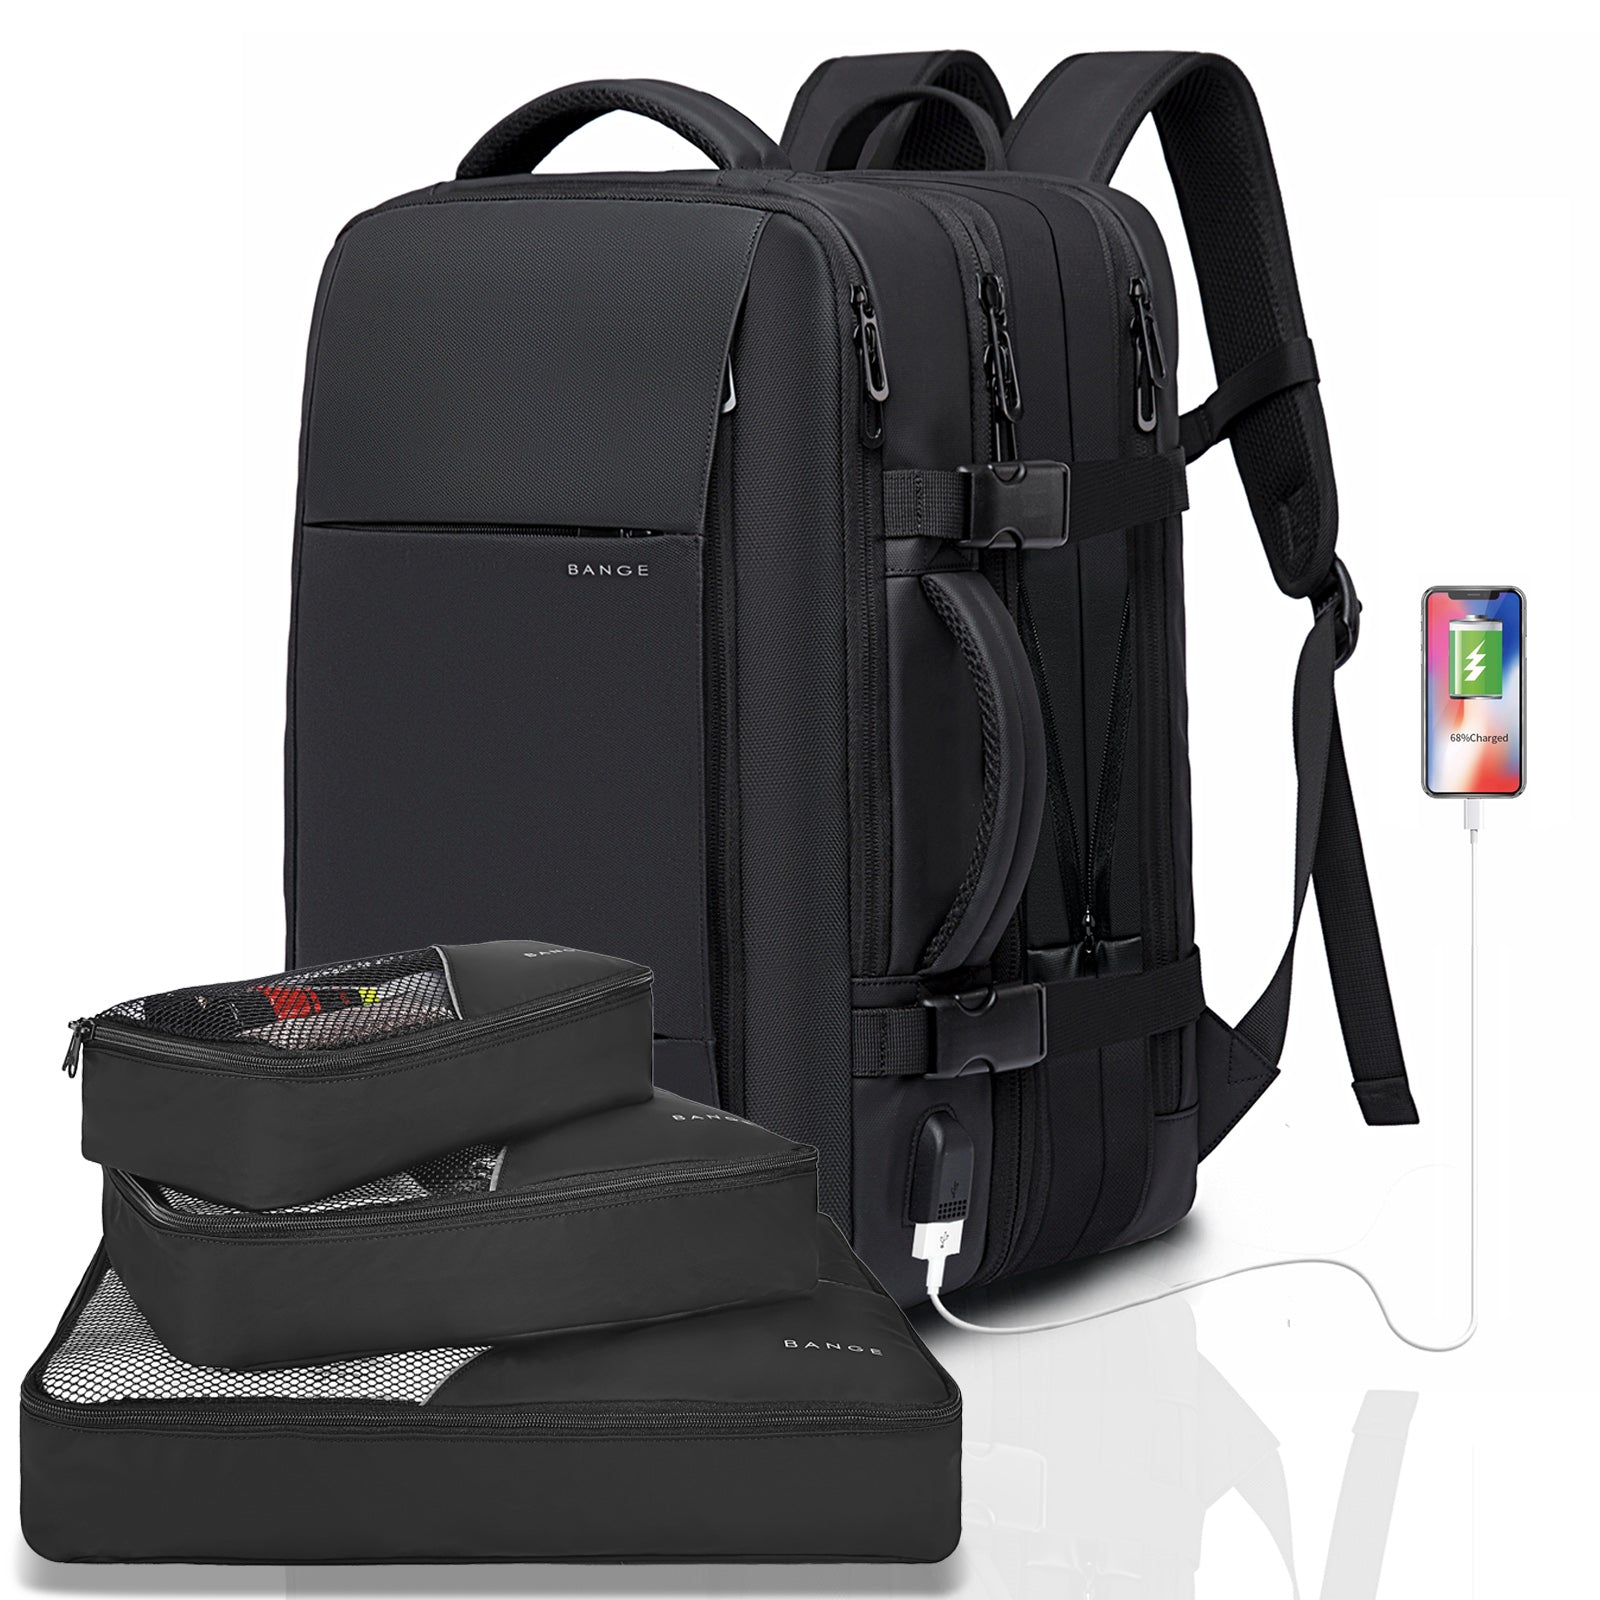 35l medium travel backpack